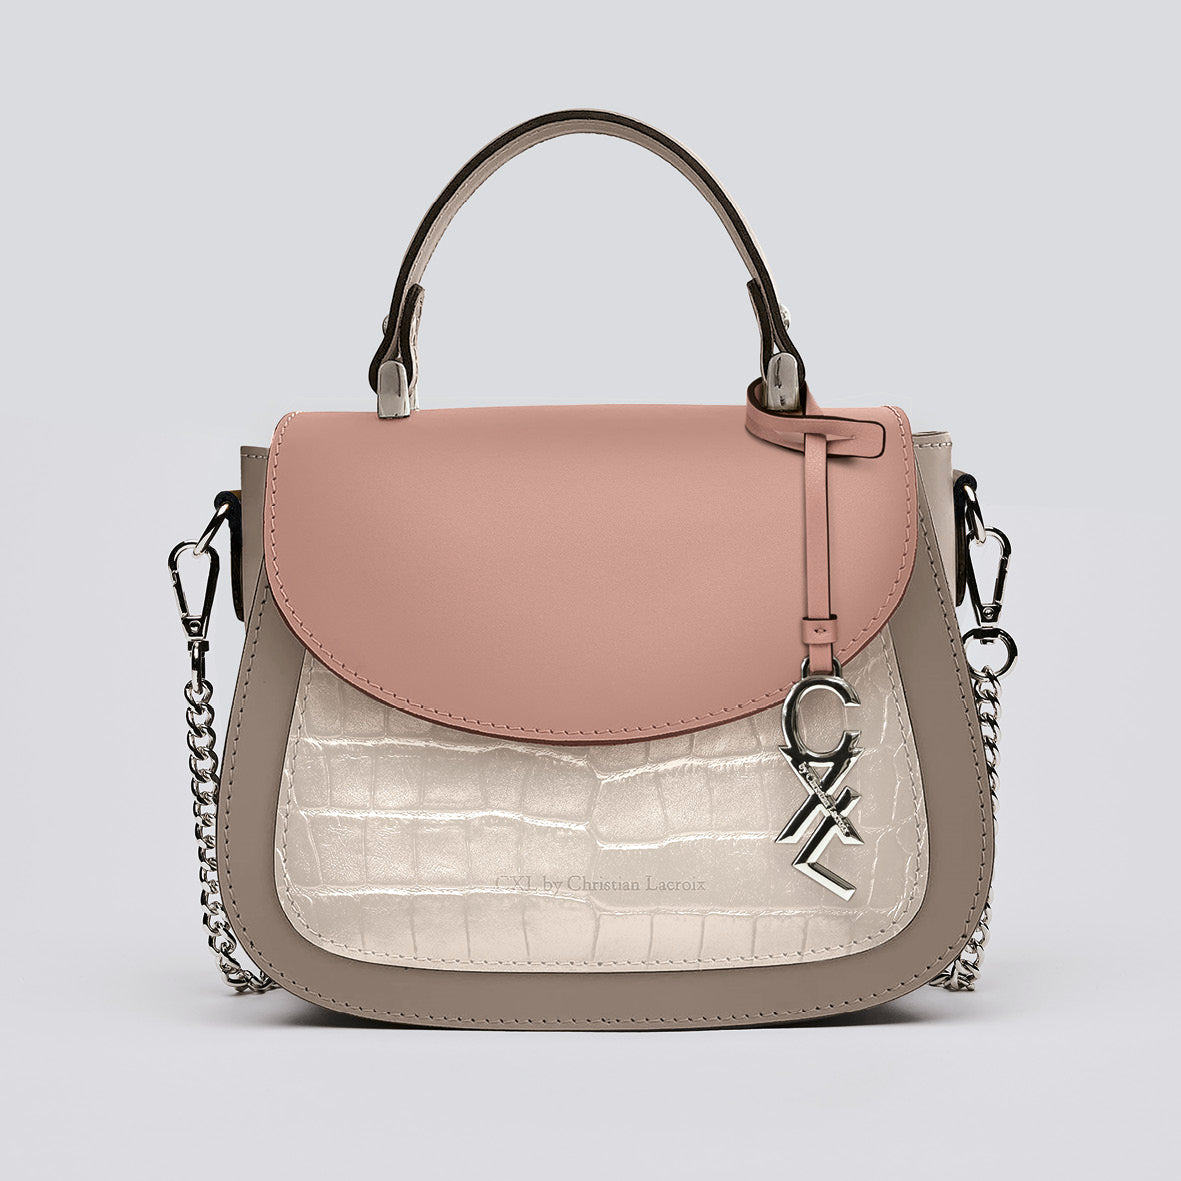 Leather handbag - Haussmann Tricolor light pink